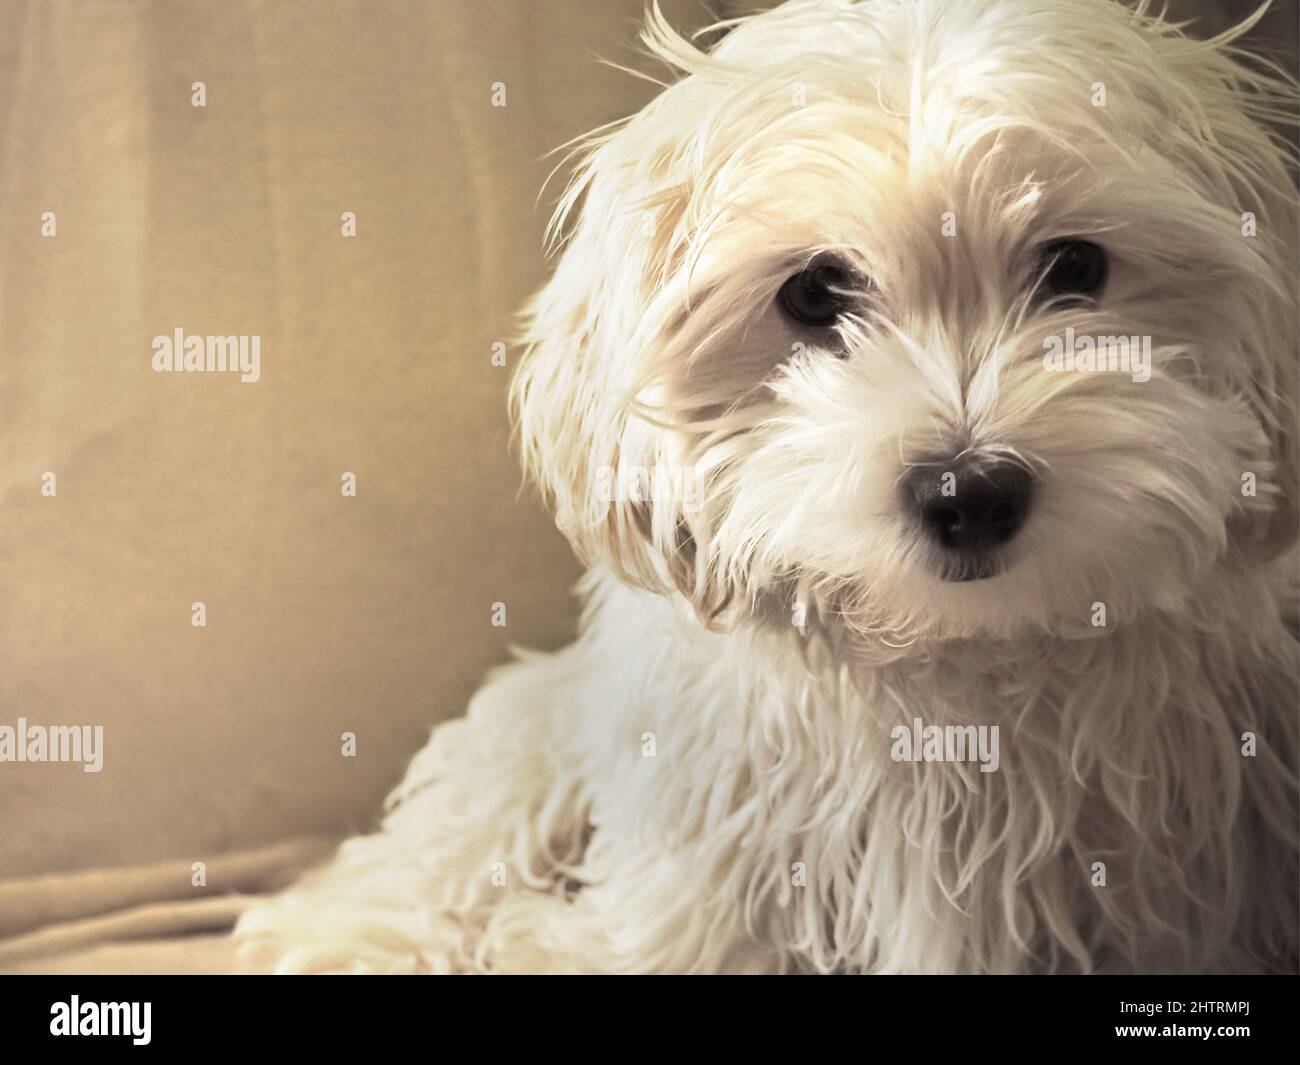 Four month old Maltese-Bichon puppy portrait Stock Photo